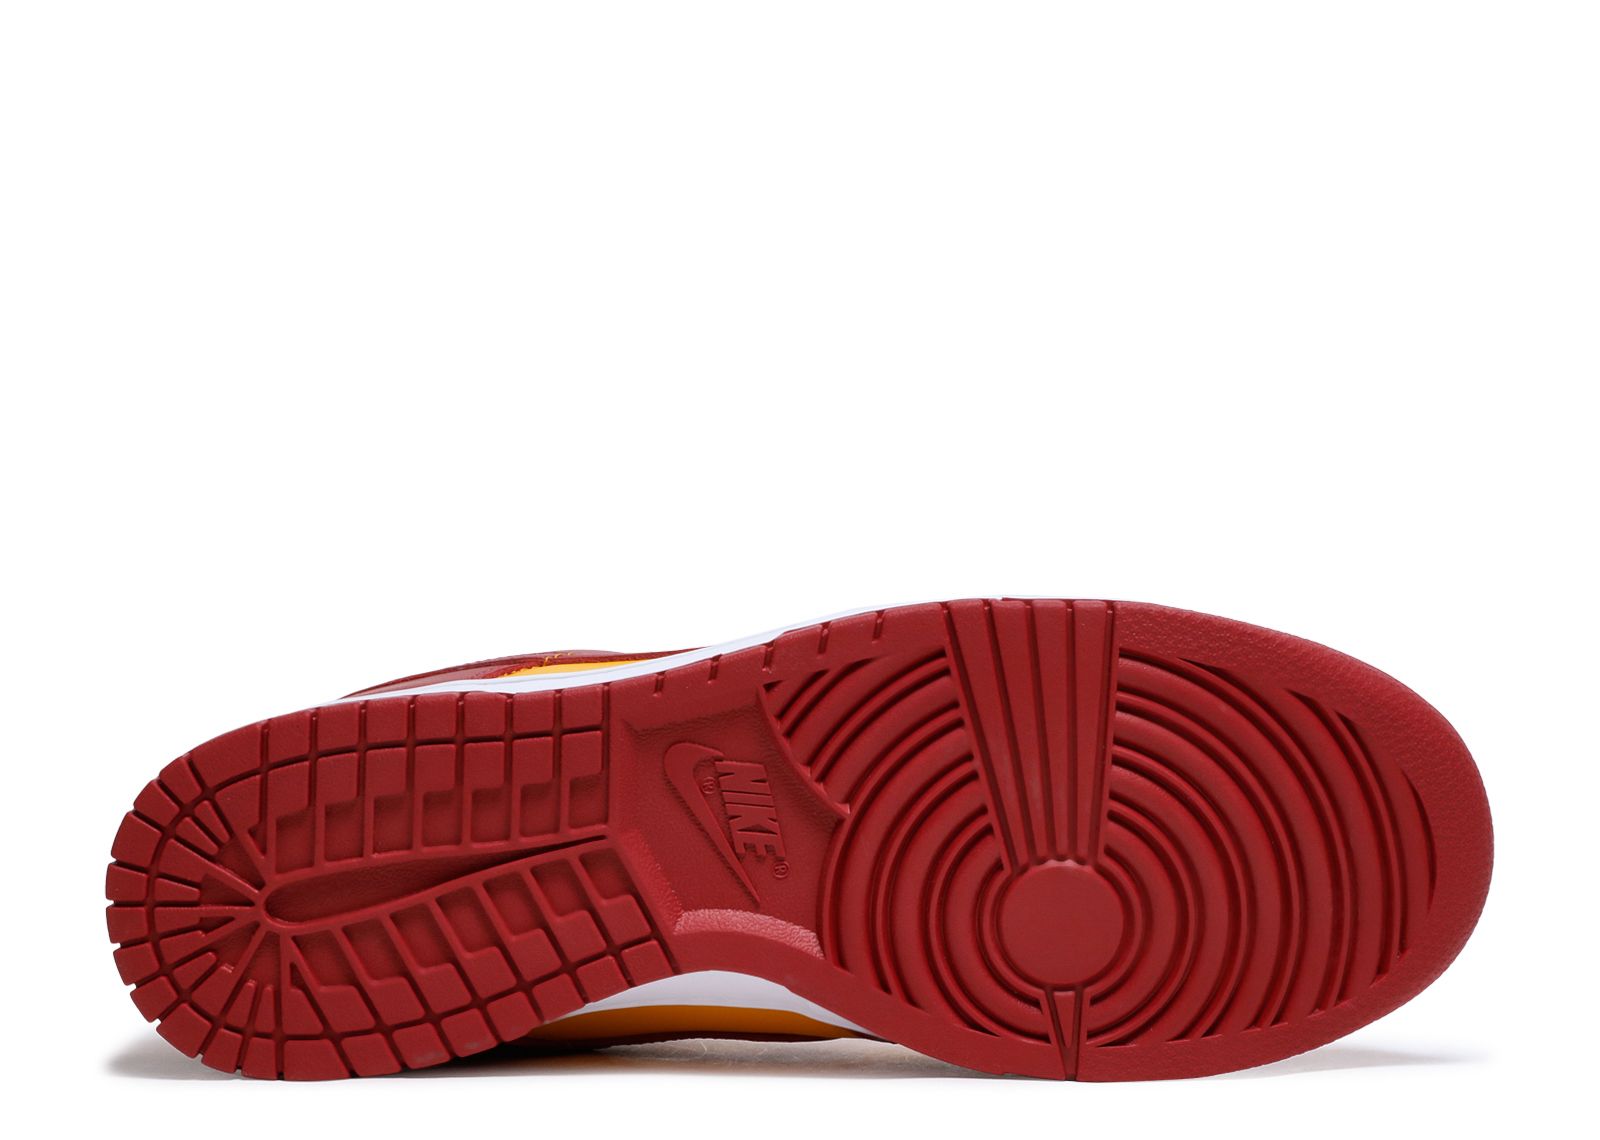 Dunk Low 'USC' - Nike - DD1391 701 - midas gold/tough red/white